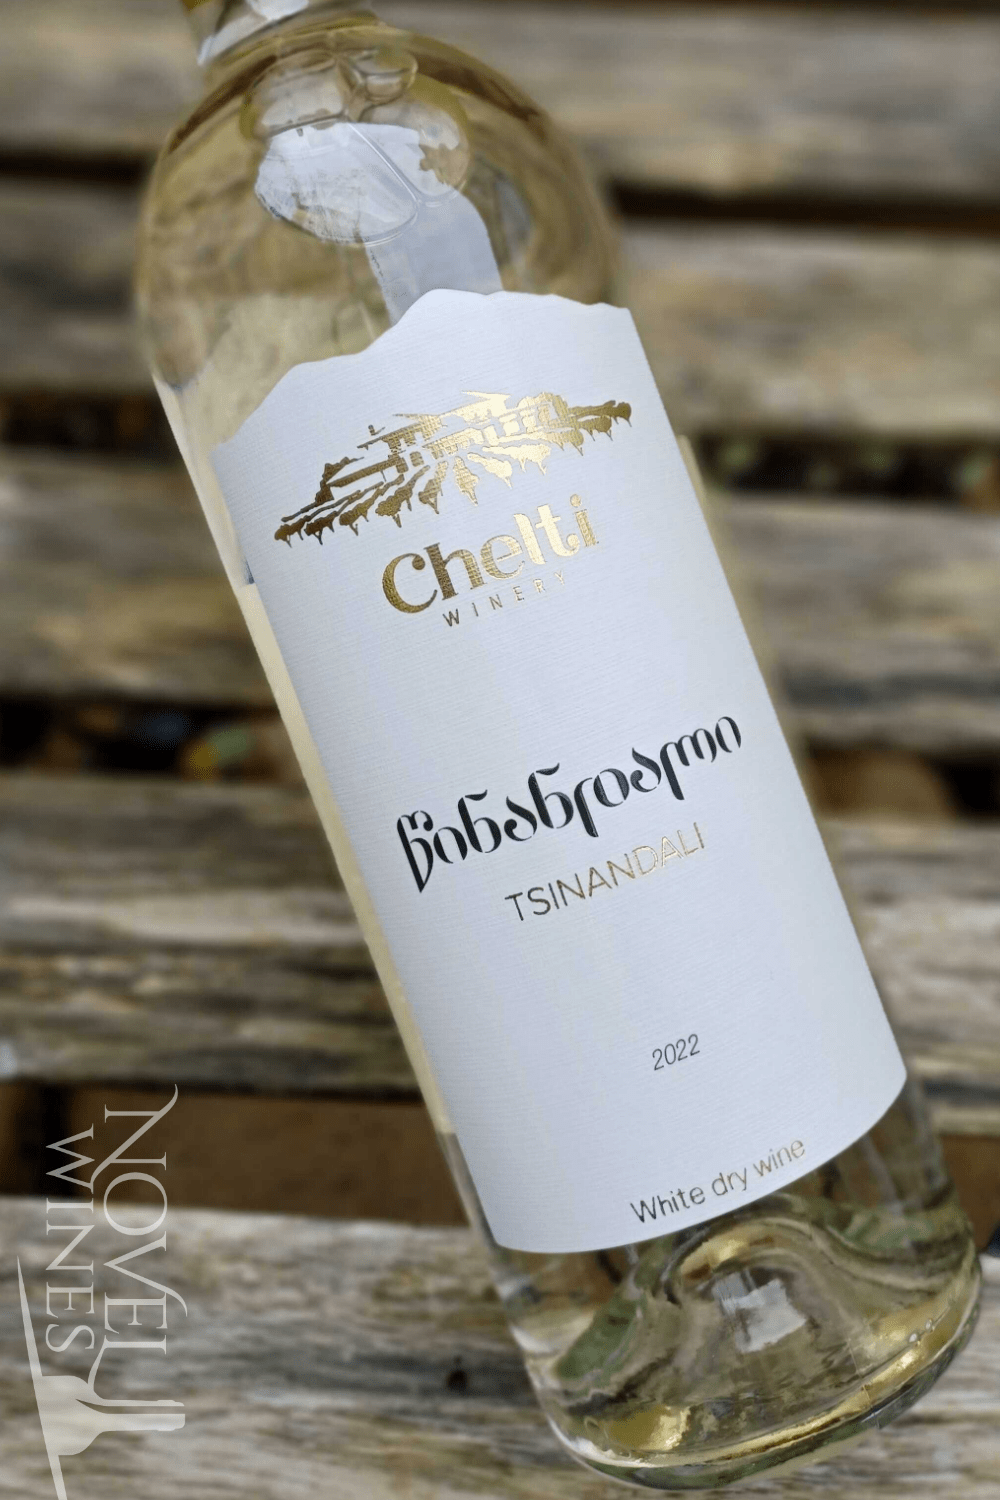 Chelti Winery White Wine Chelti Winery Tsinandali 2022, Georgia